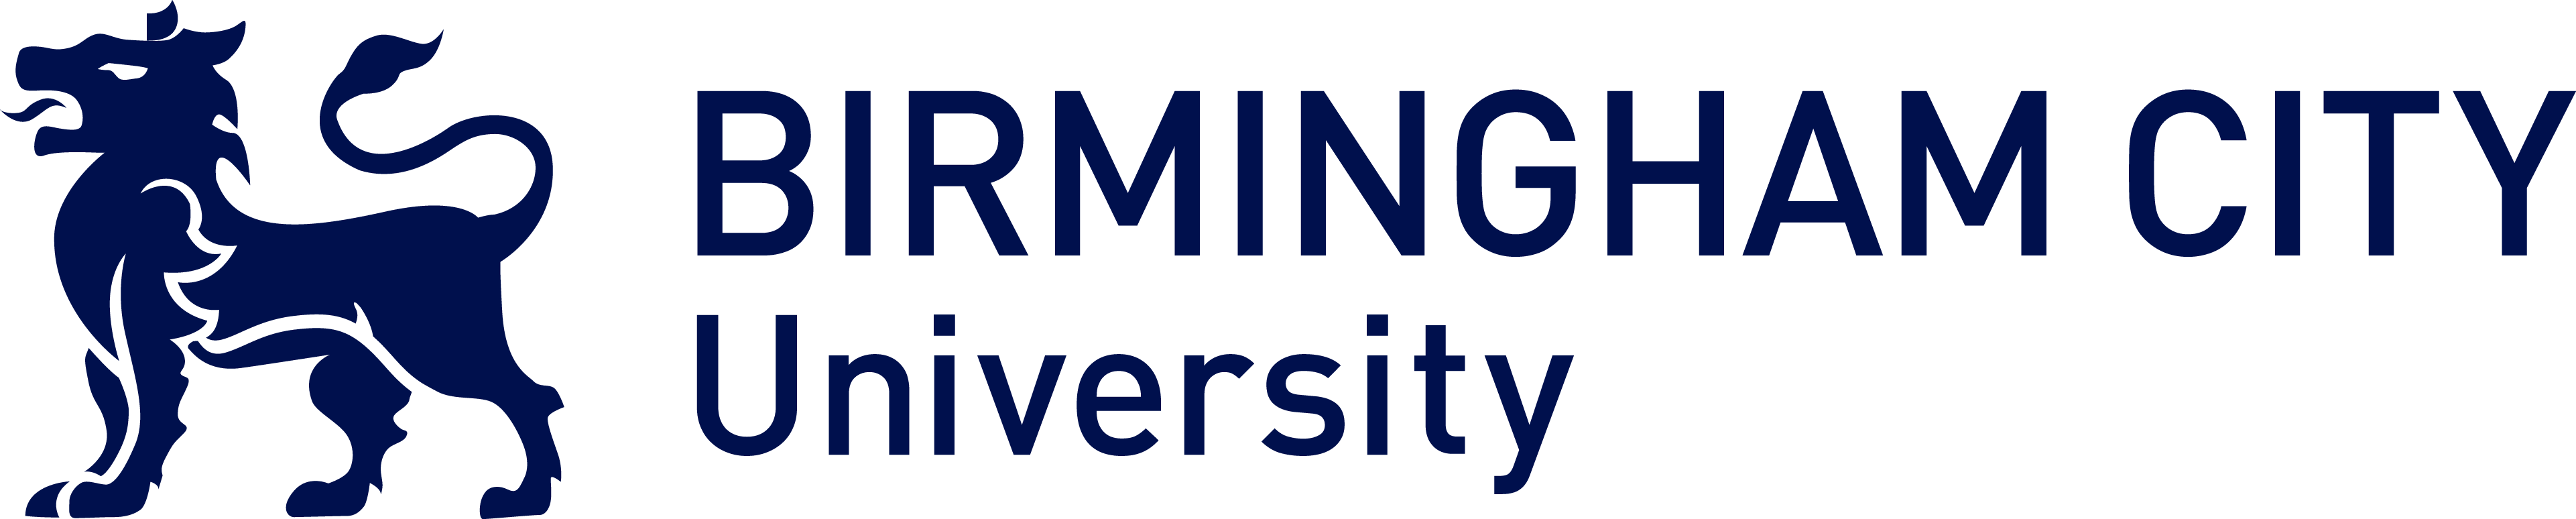 BCU Logo - Birmingham City University Education Ventures